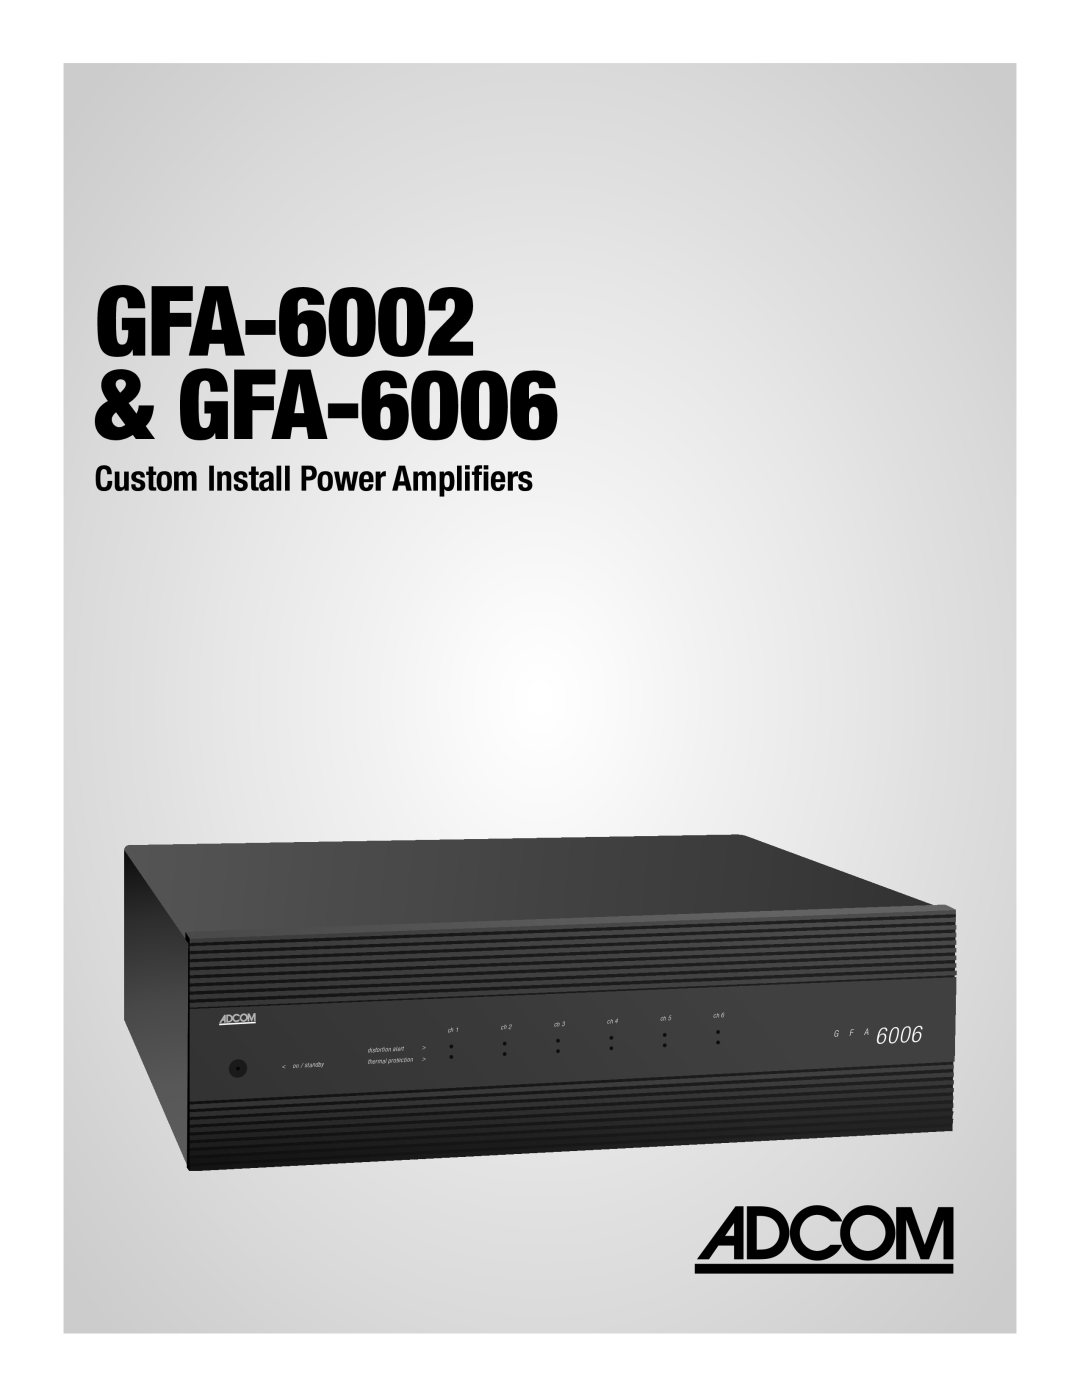 Adcom owner manual GFA-6002 & GFA-6006, Custom Install Power Amplifiers, on / standby, distortion alert 